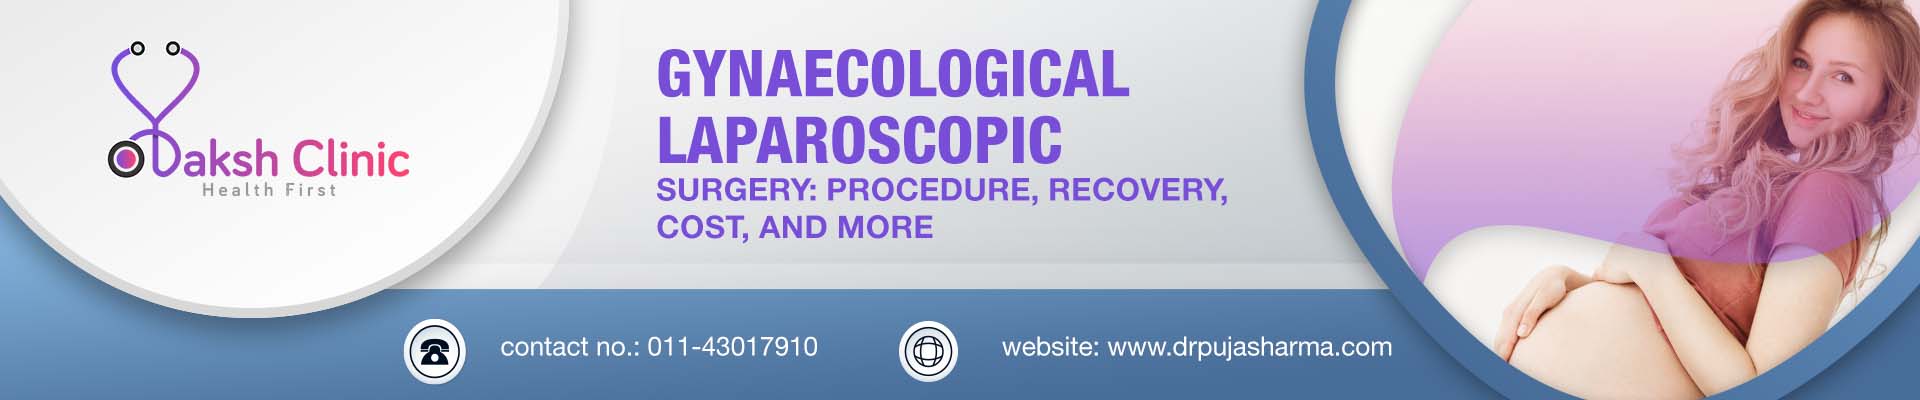 Gynaecological laparoscopic surgery